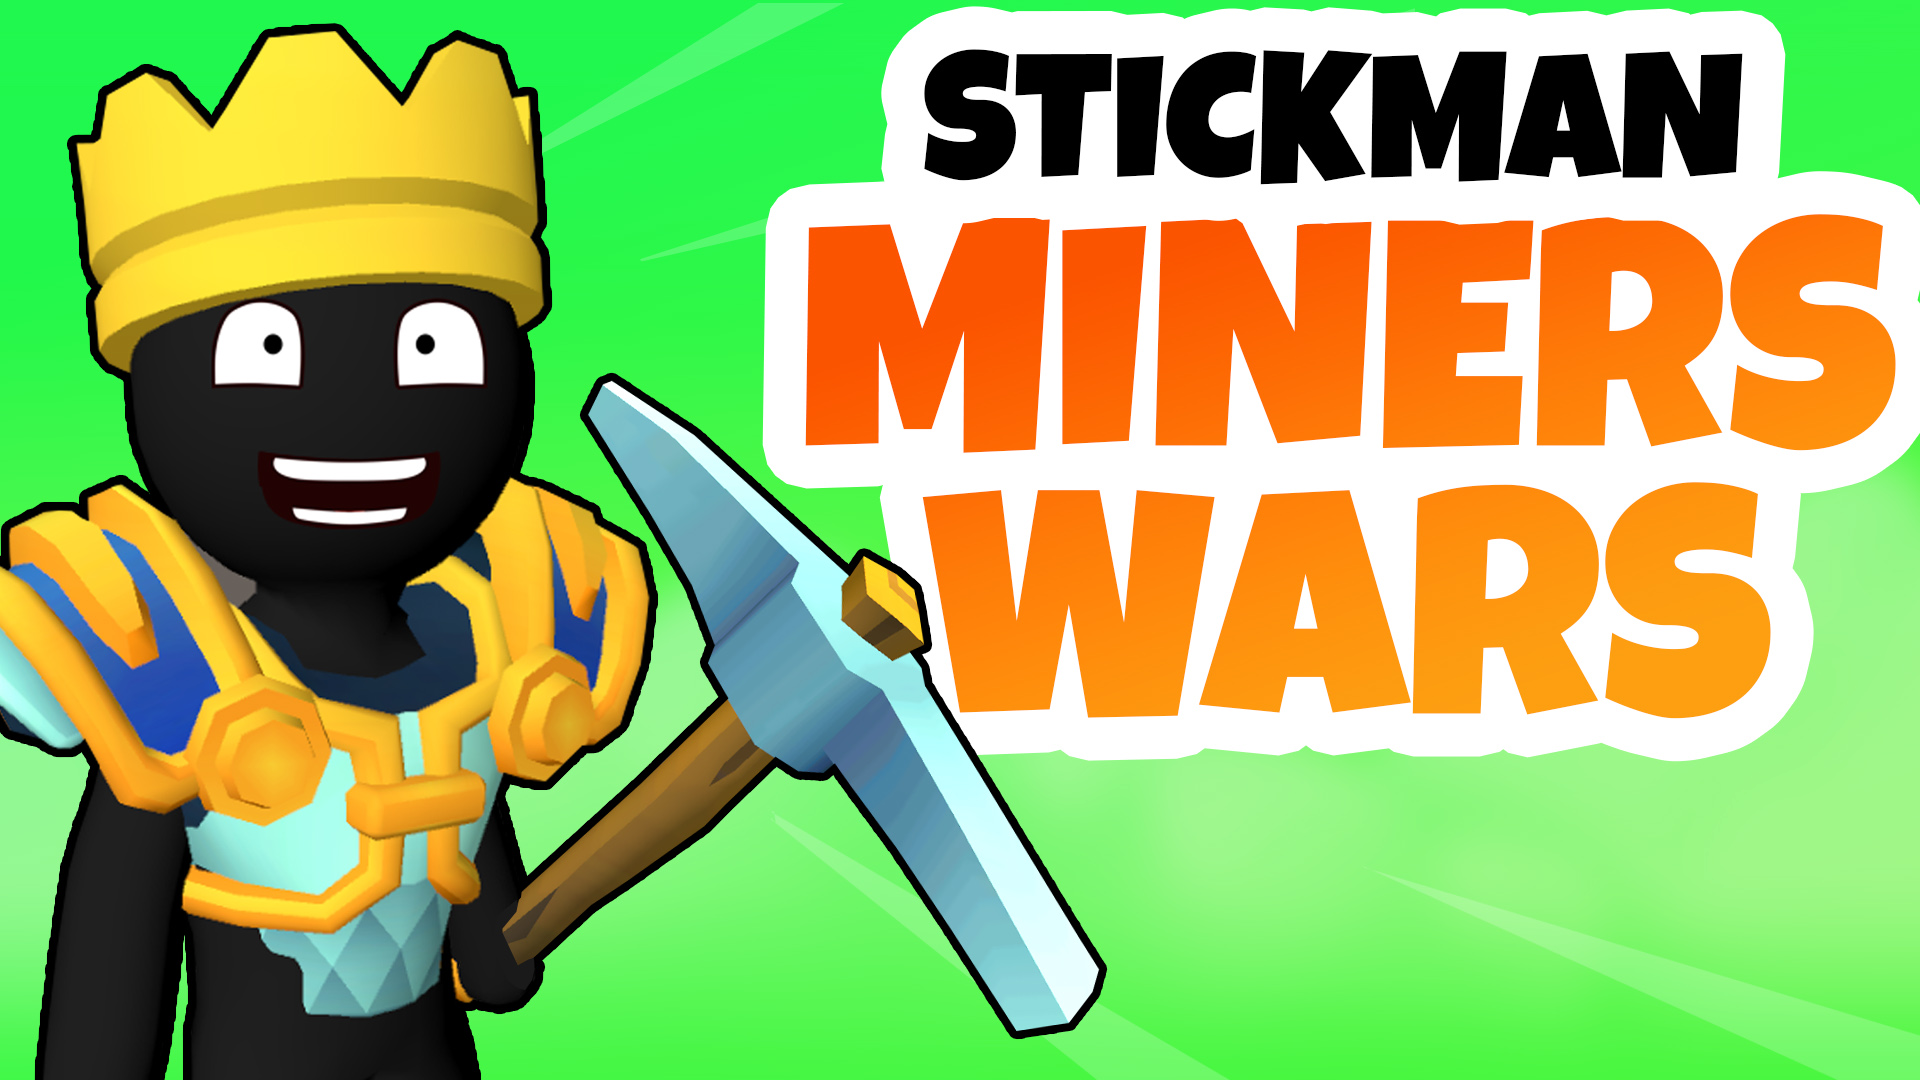 Stickman Miners Wars Game Image